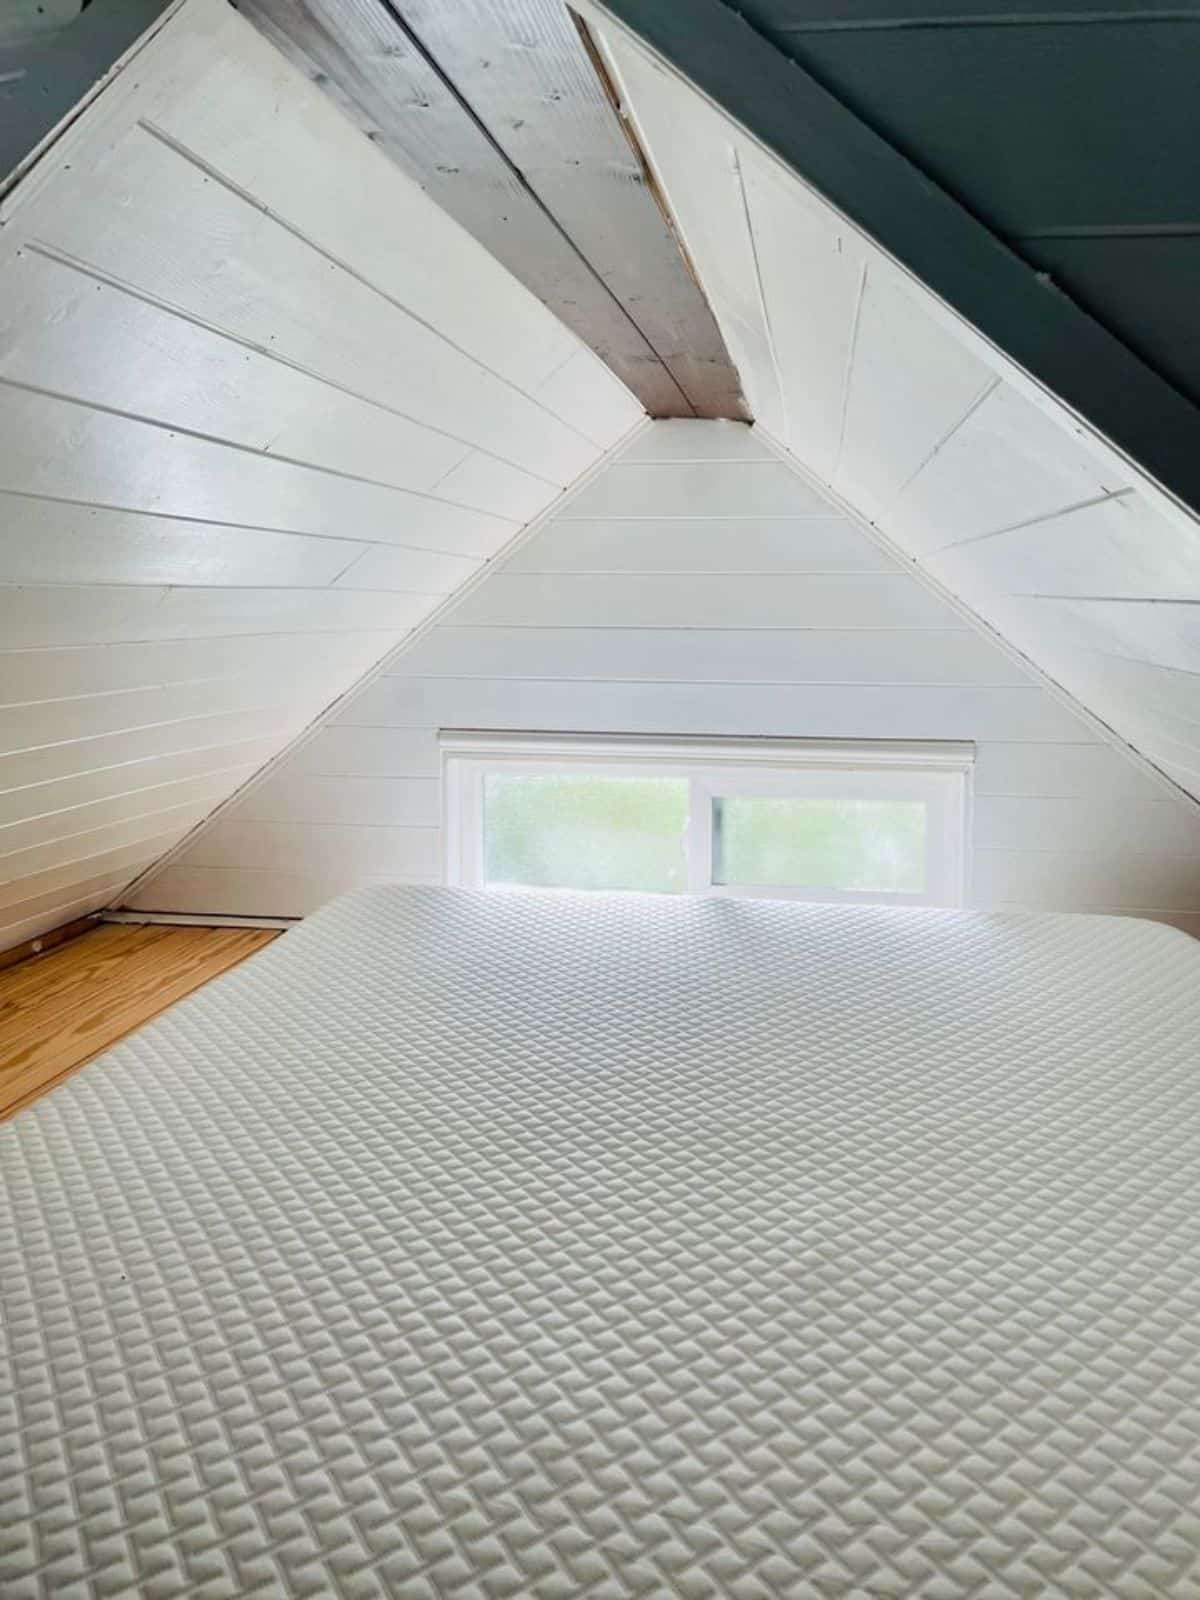 loft bedroom has a comfortable mattress and huge window